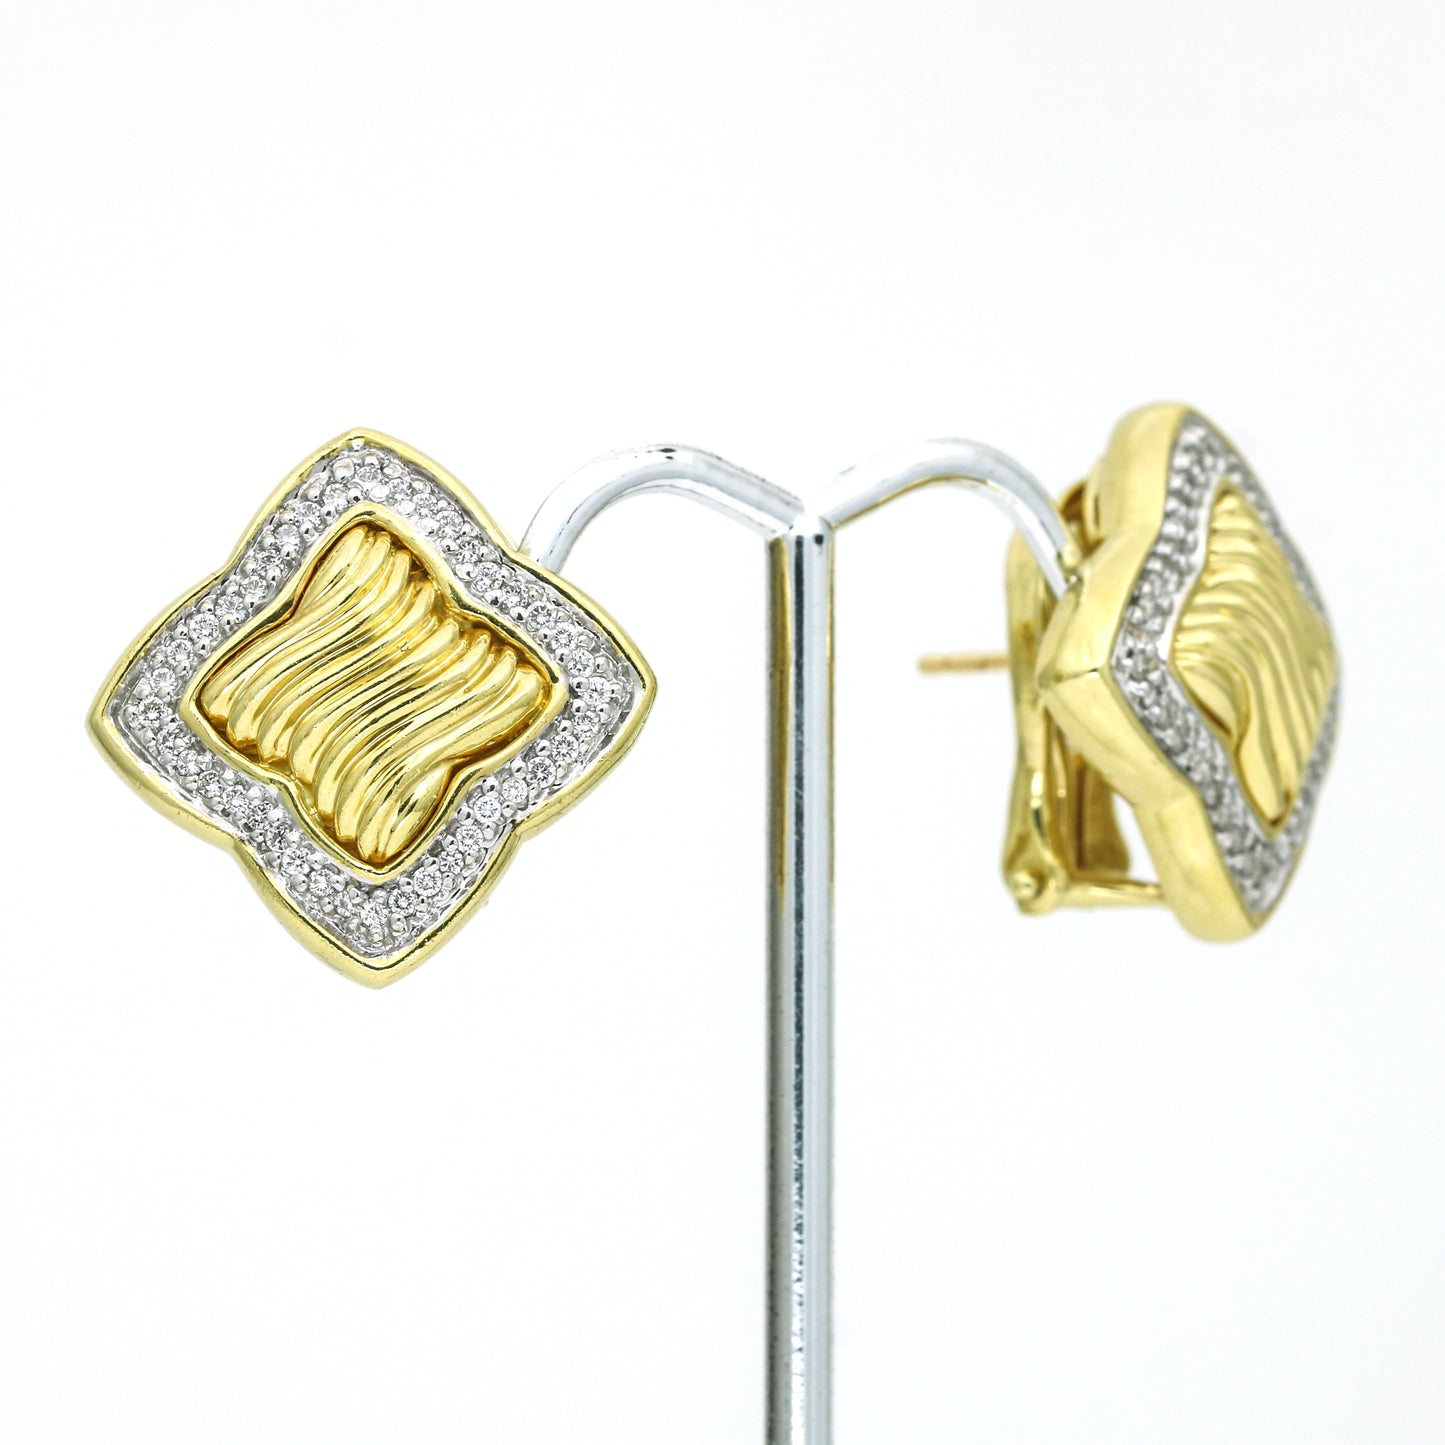 David Yurman 18k Gold Diamond Quatrefoil Earrings - Size Medium